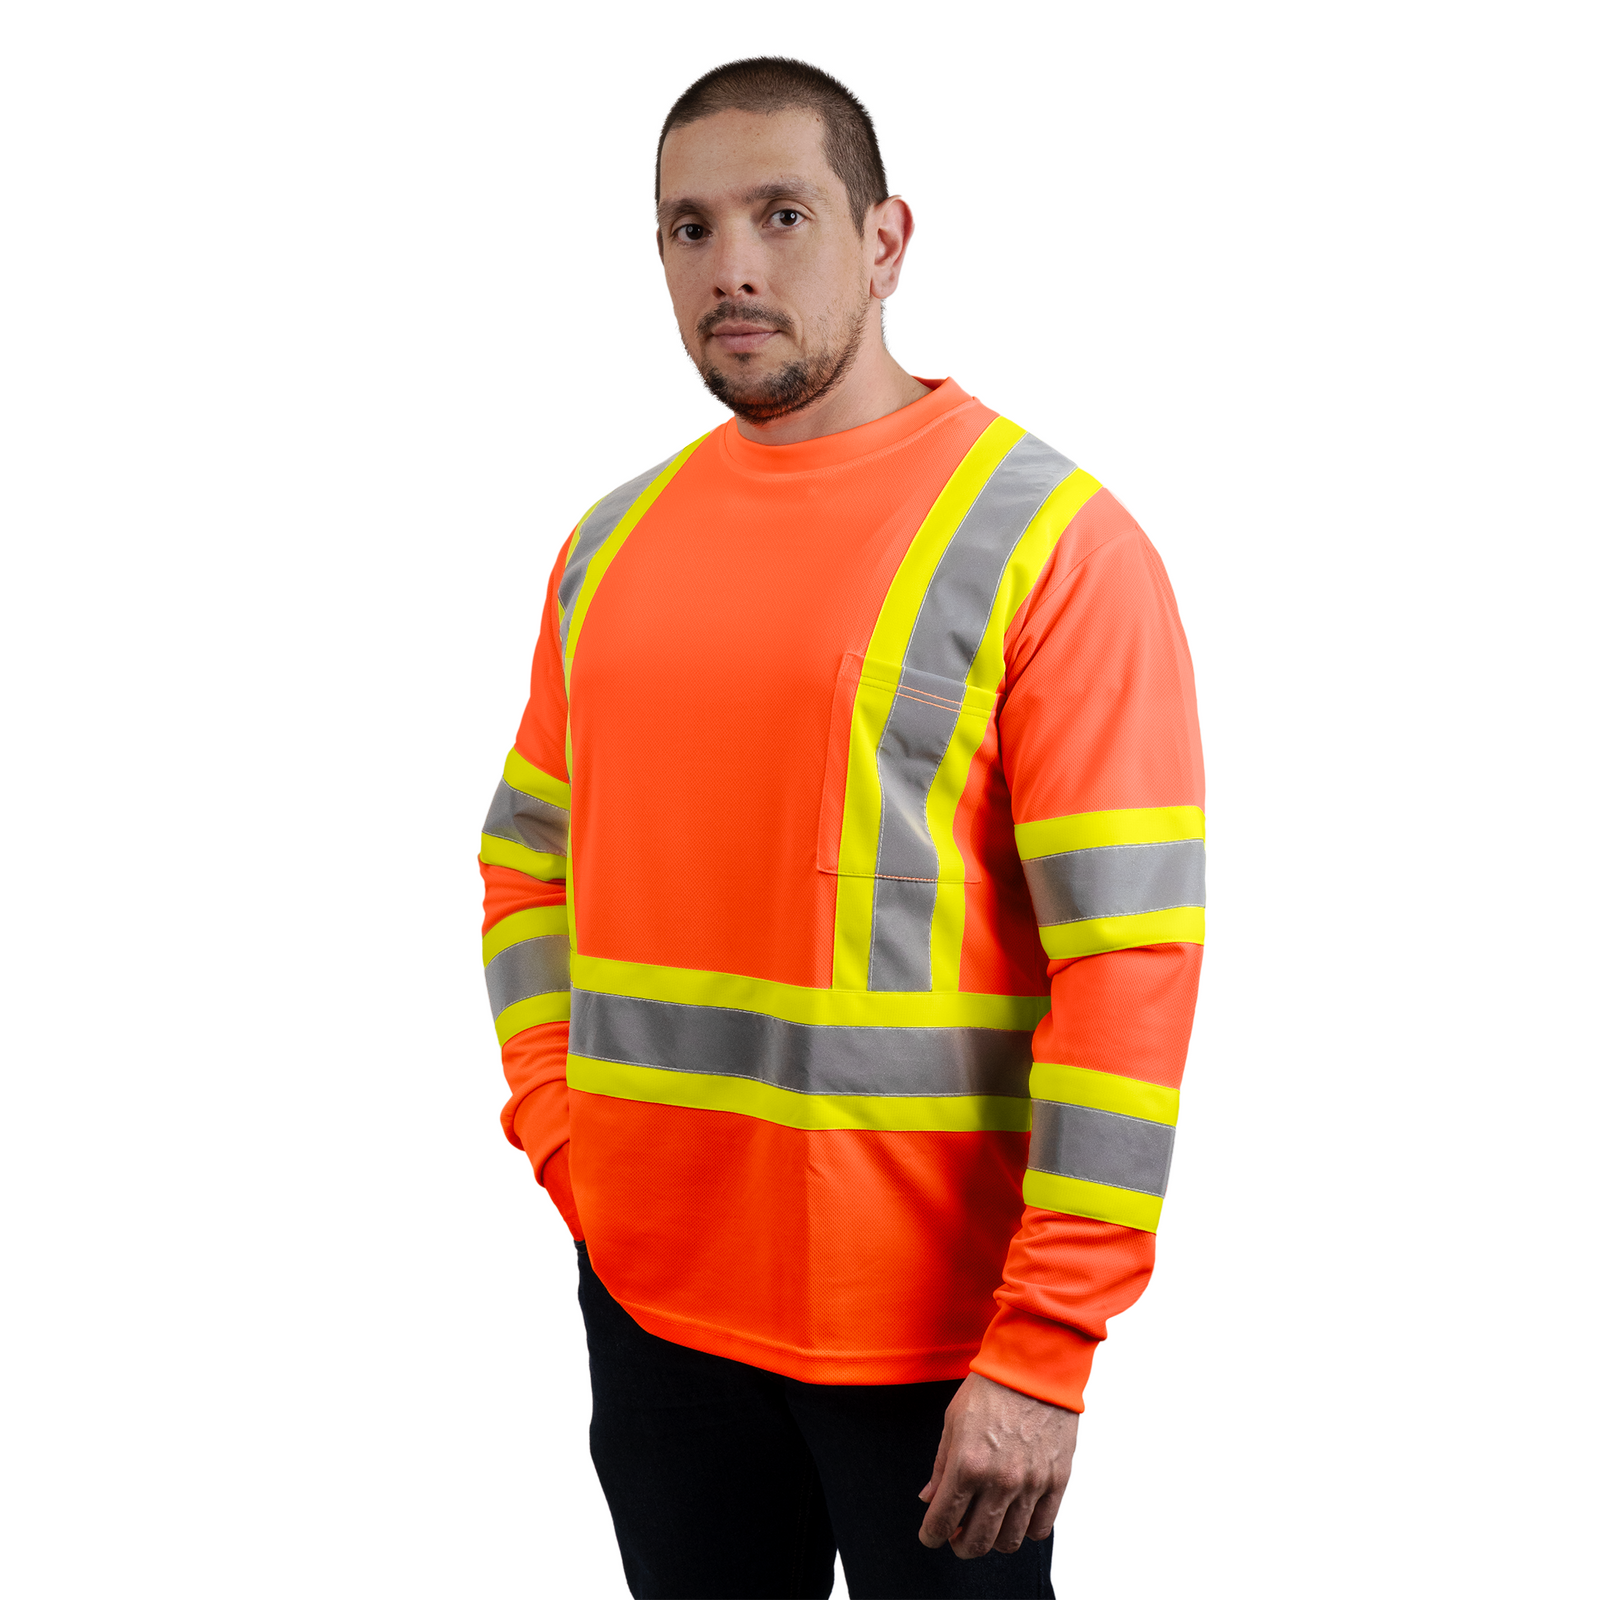 Man wearing the Orange ANSI compliant long sleeve safety shirt